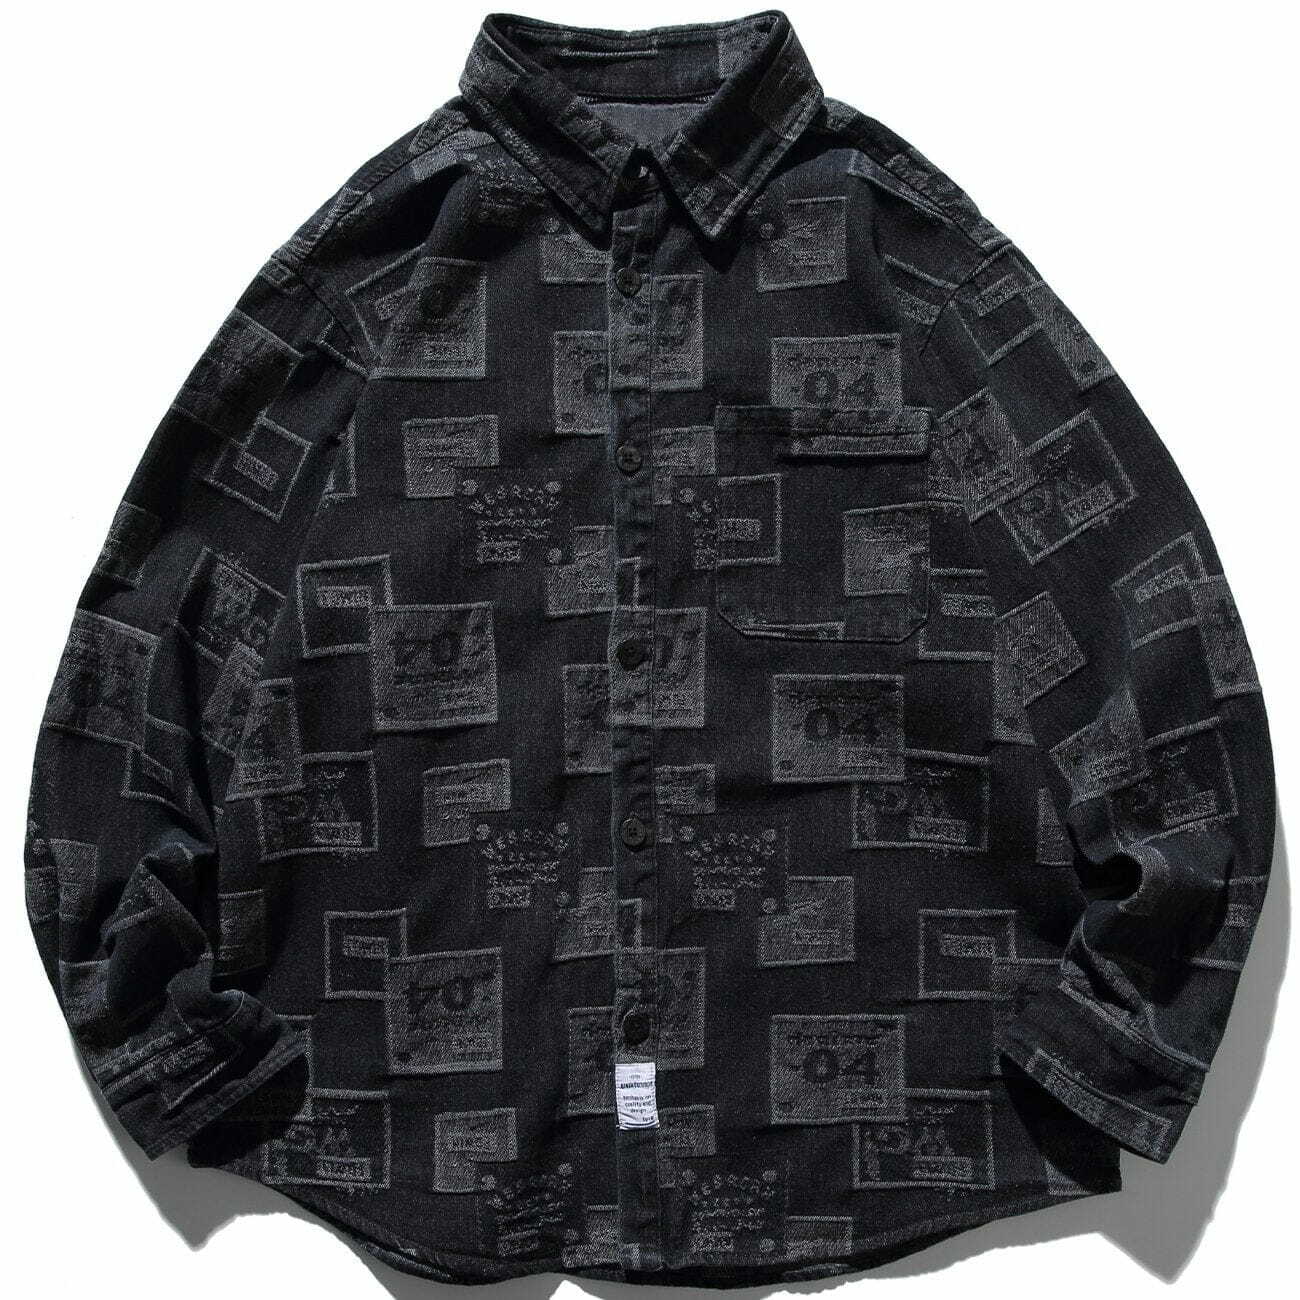 embossed square pattern shirt retro & edgy long sleeve 6040